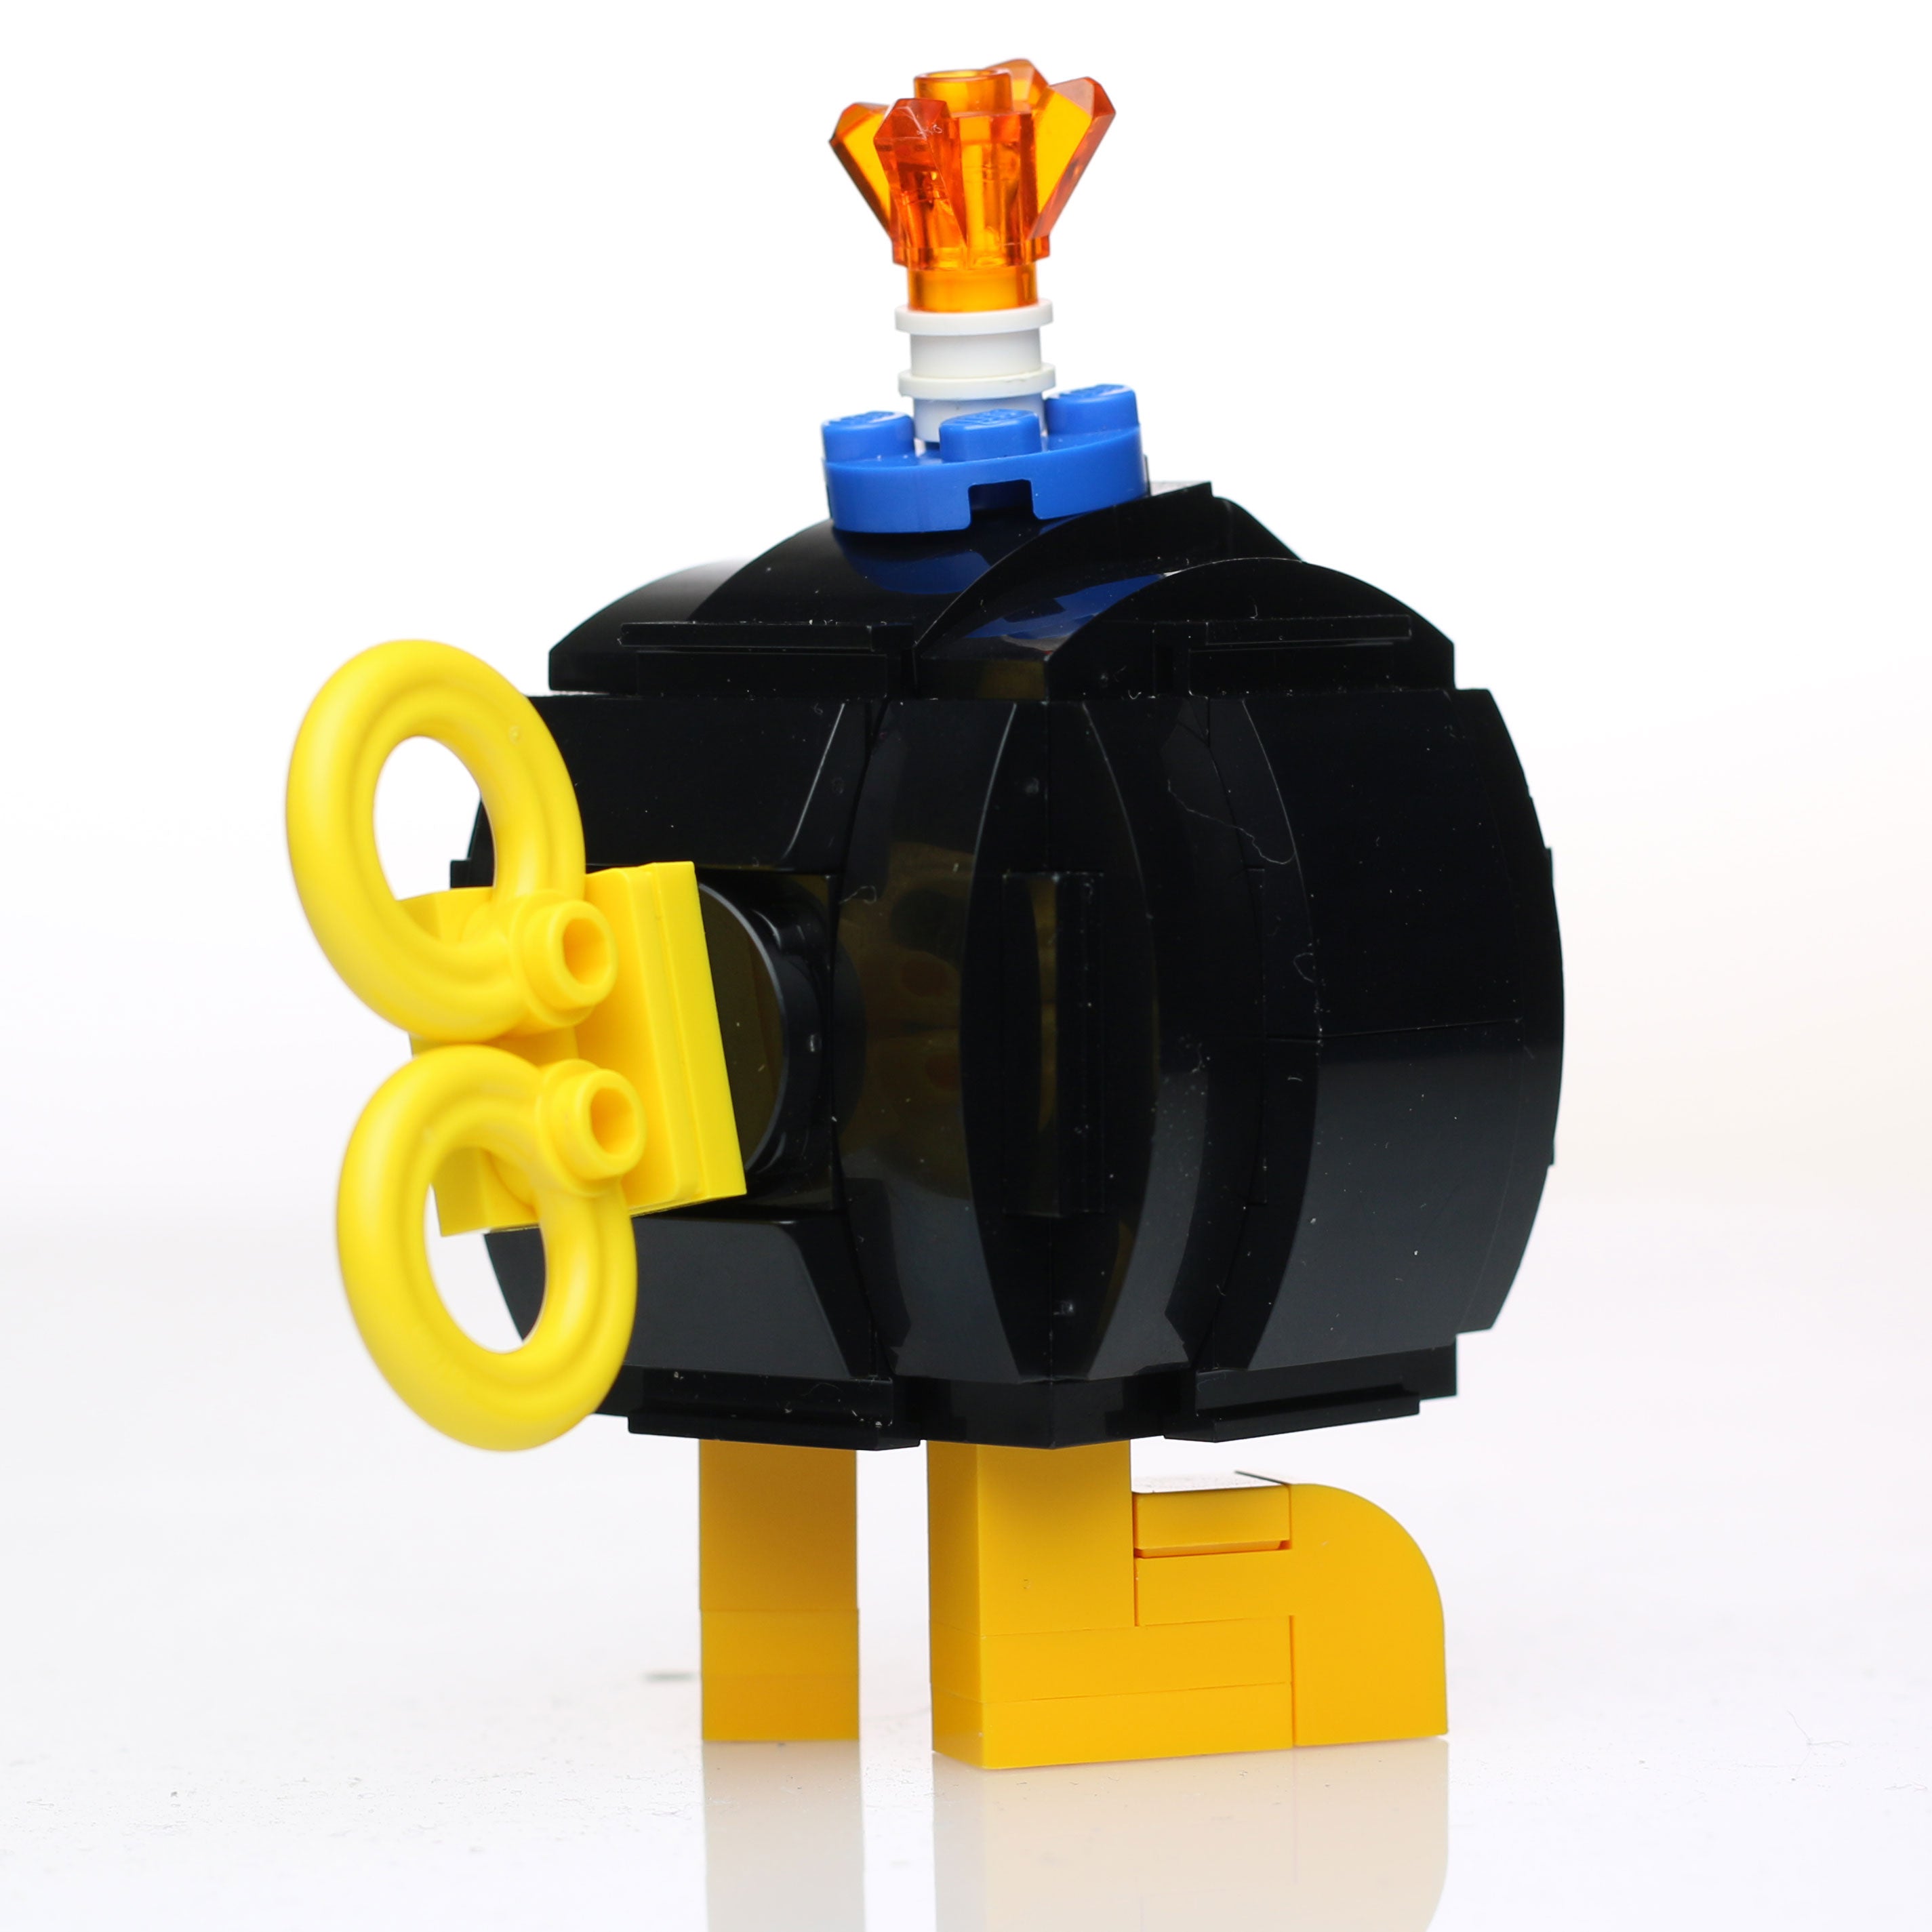 Bomber Man made using LEGO parts - B3 Customs